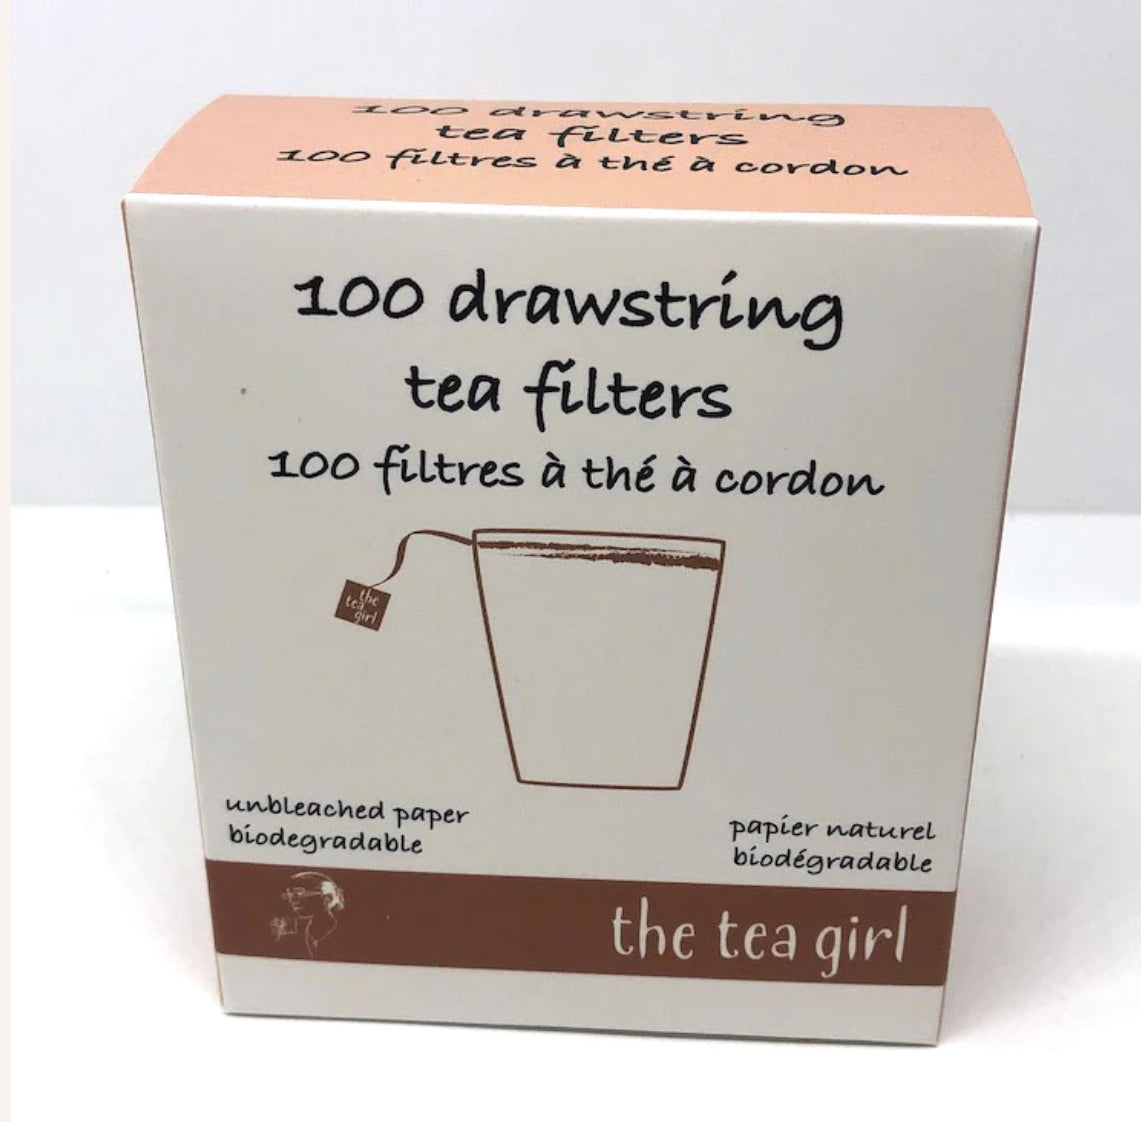 Tea Girl Drawstring Tea Filters box 100